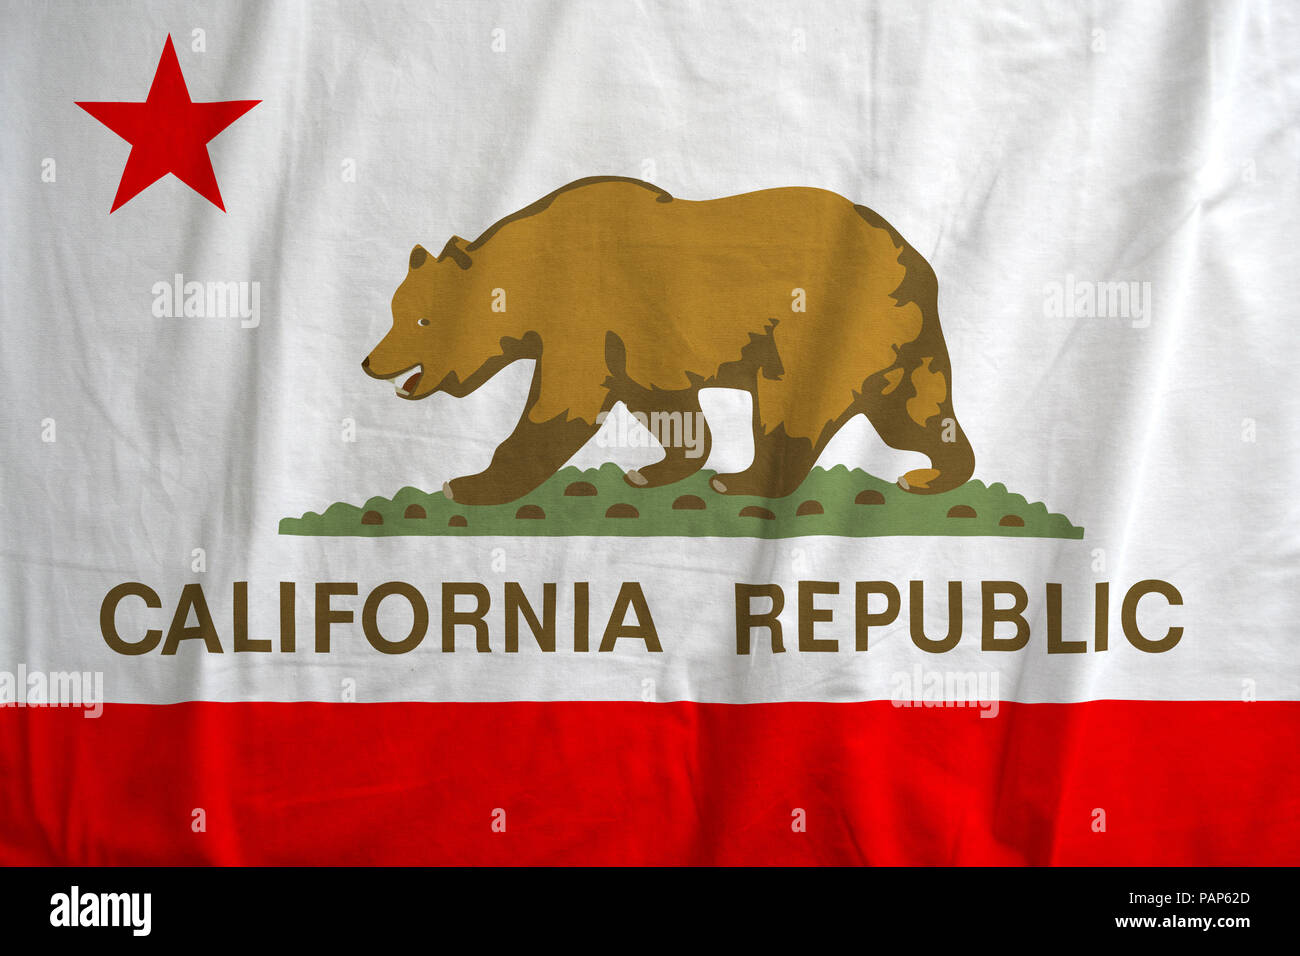 Fabric texture of the flag of California Republic, USA. Stock Photo